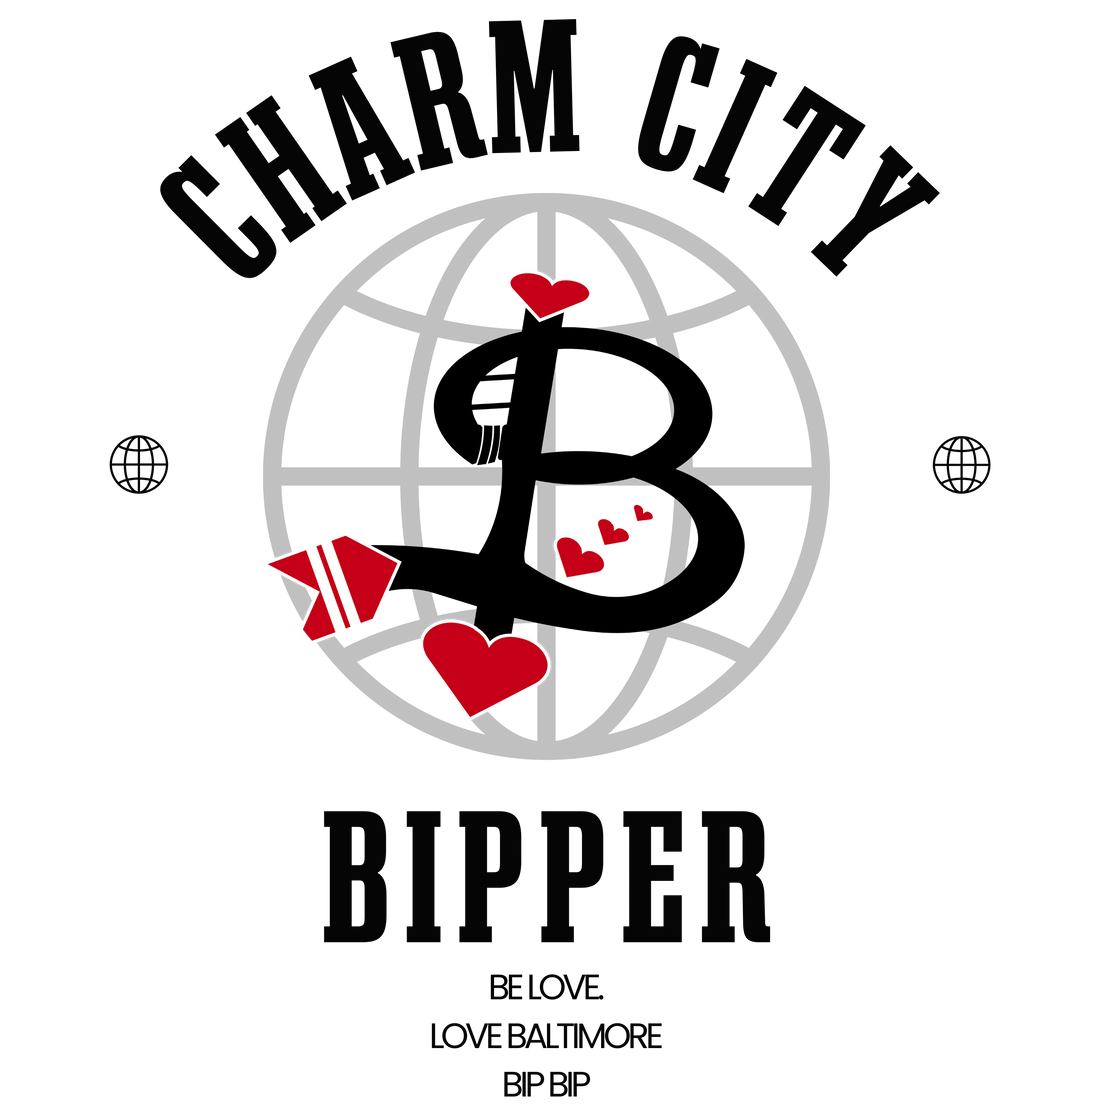 Charm City Bipper